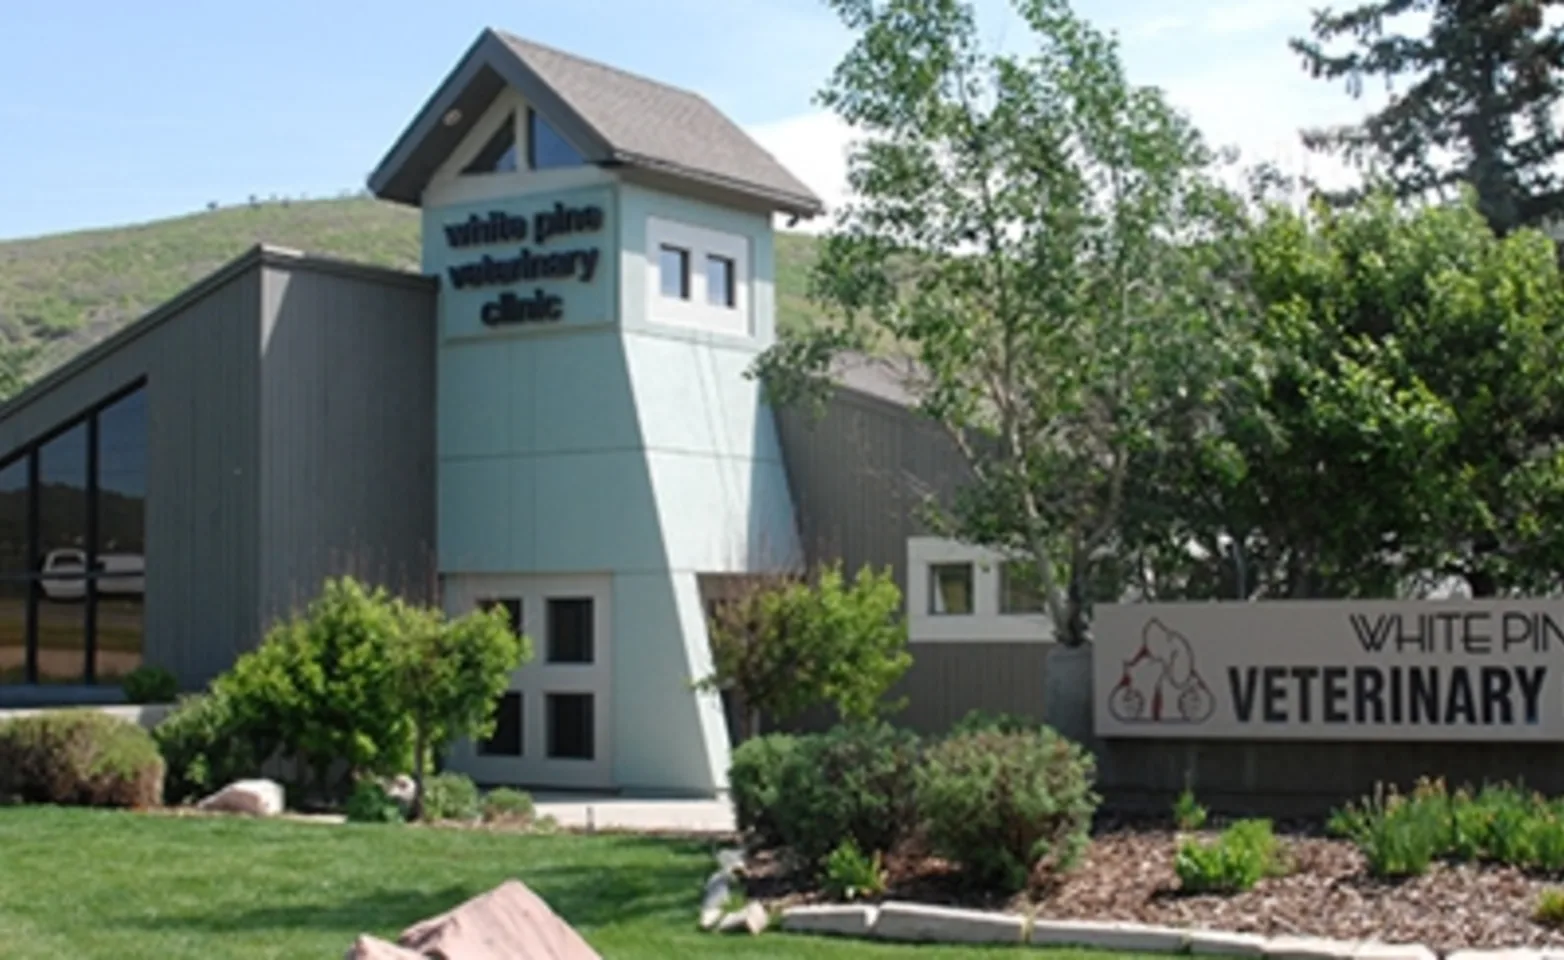 Exterior of White Pine Veterinary Hospital